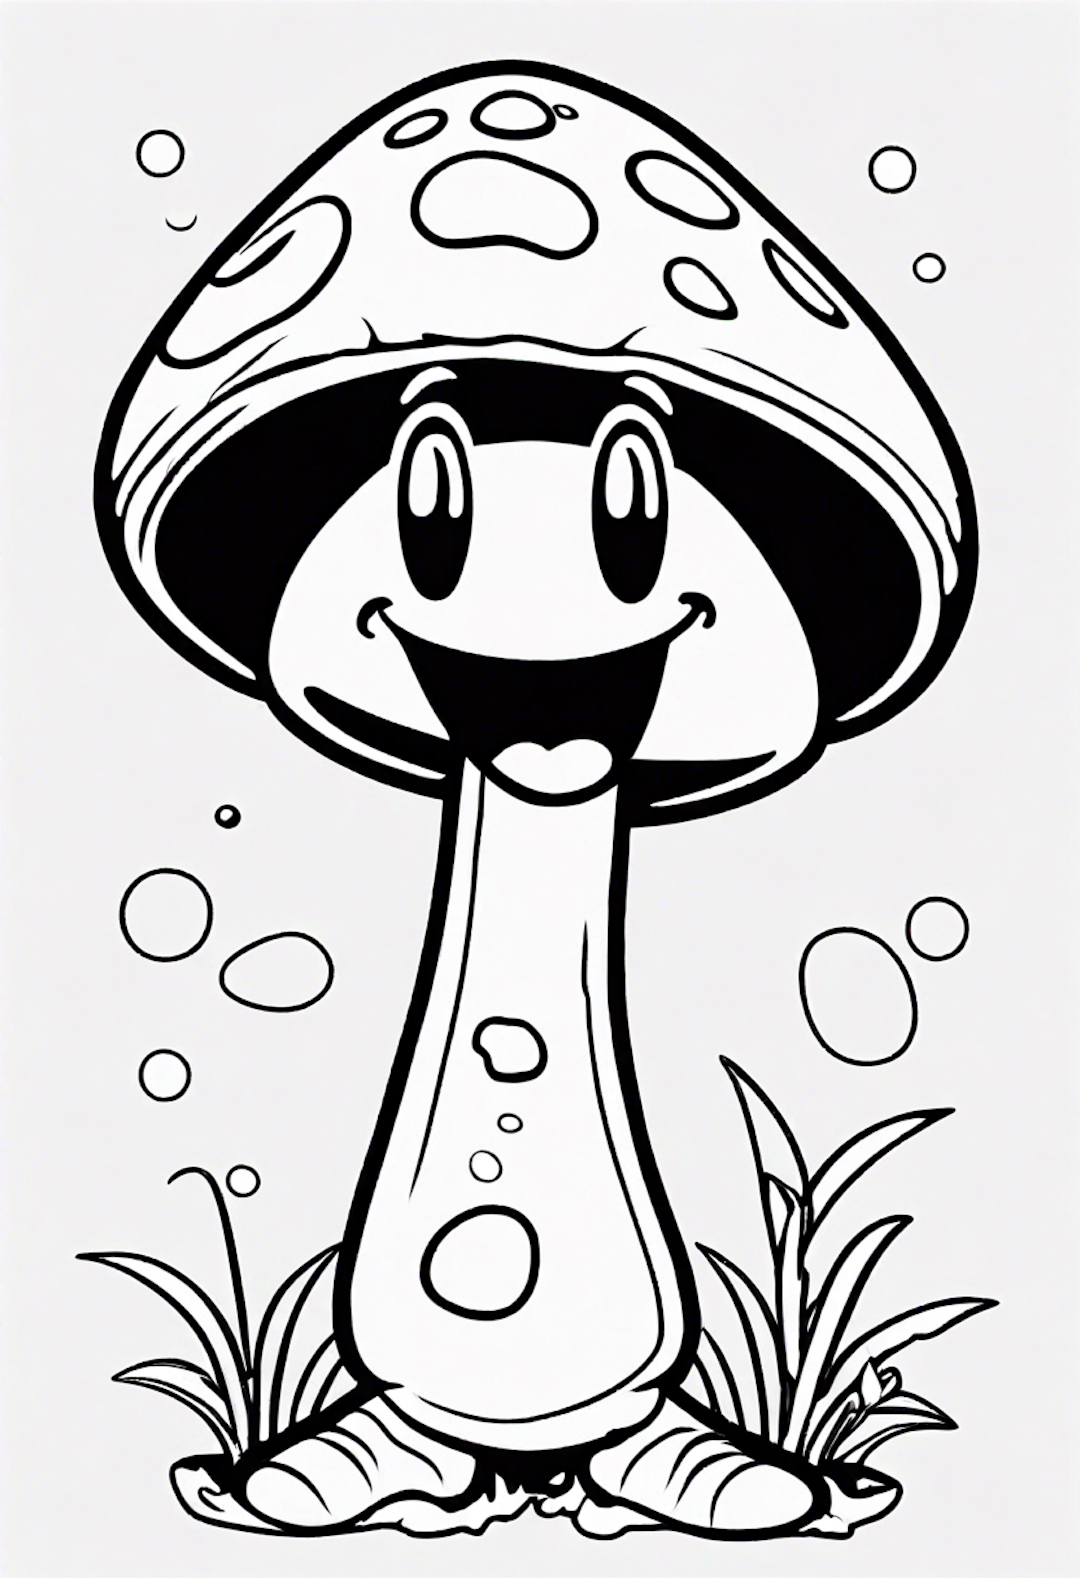 A Cartoon Mushroom Singing